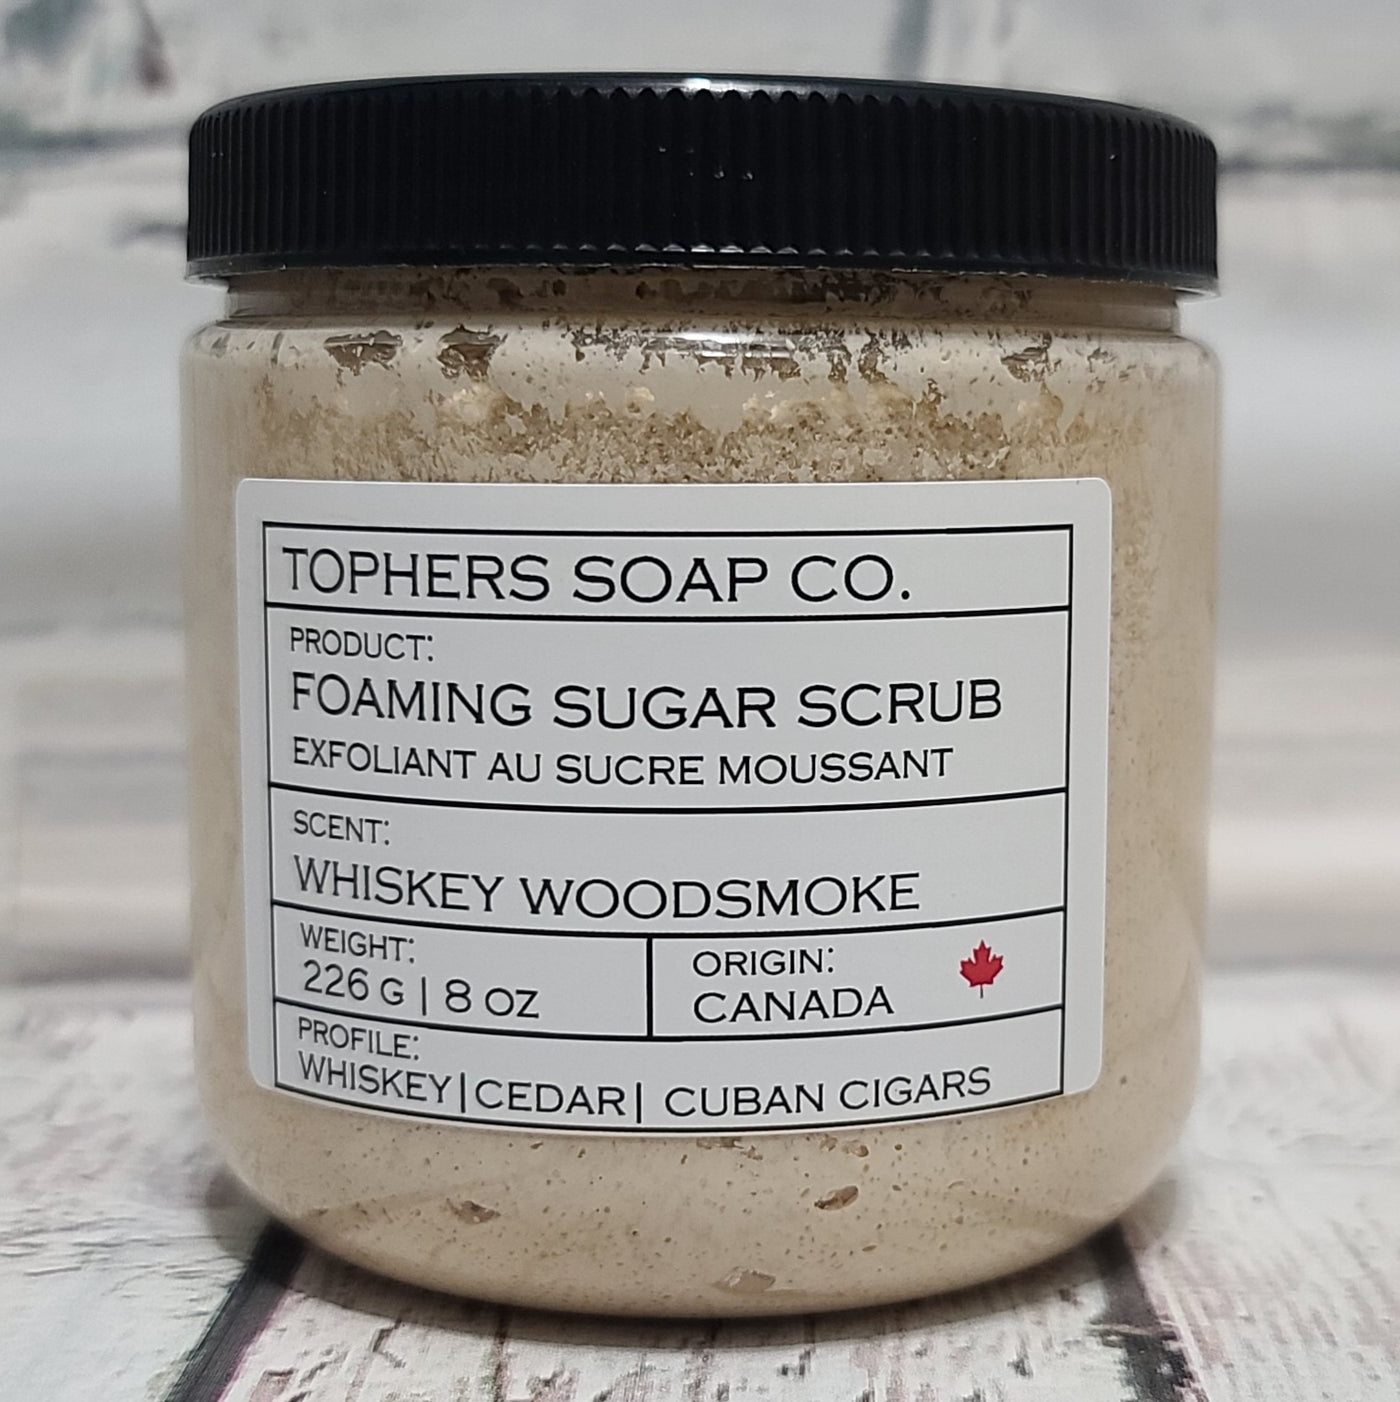 Creamy brown  sugar scrub in a clear jar with a black lid against a white brick background